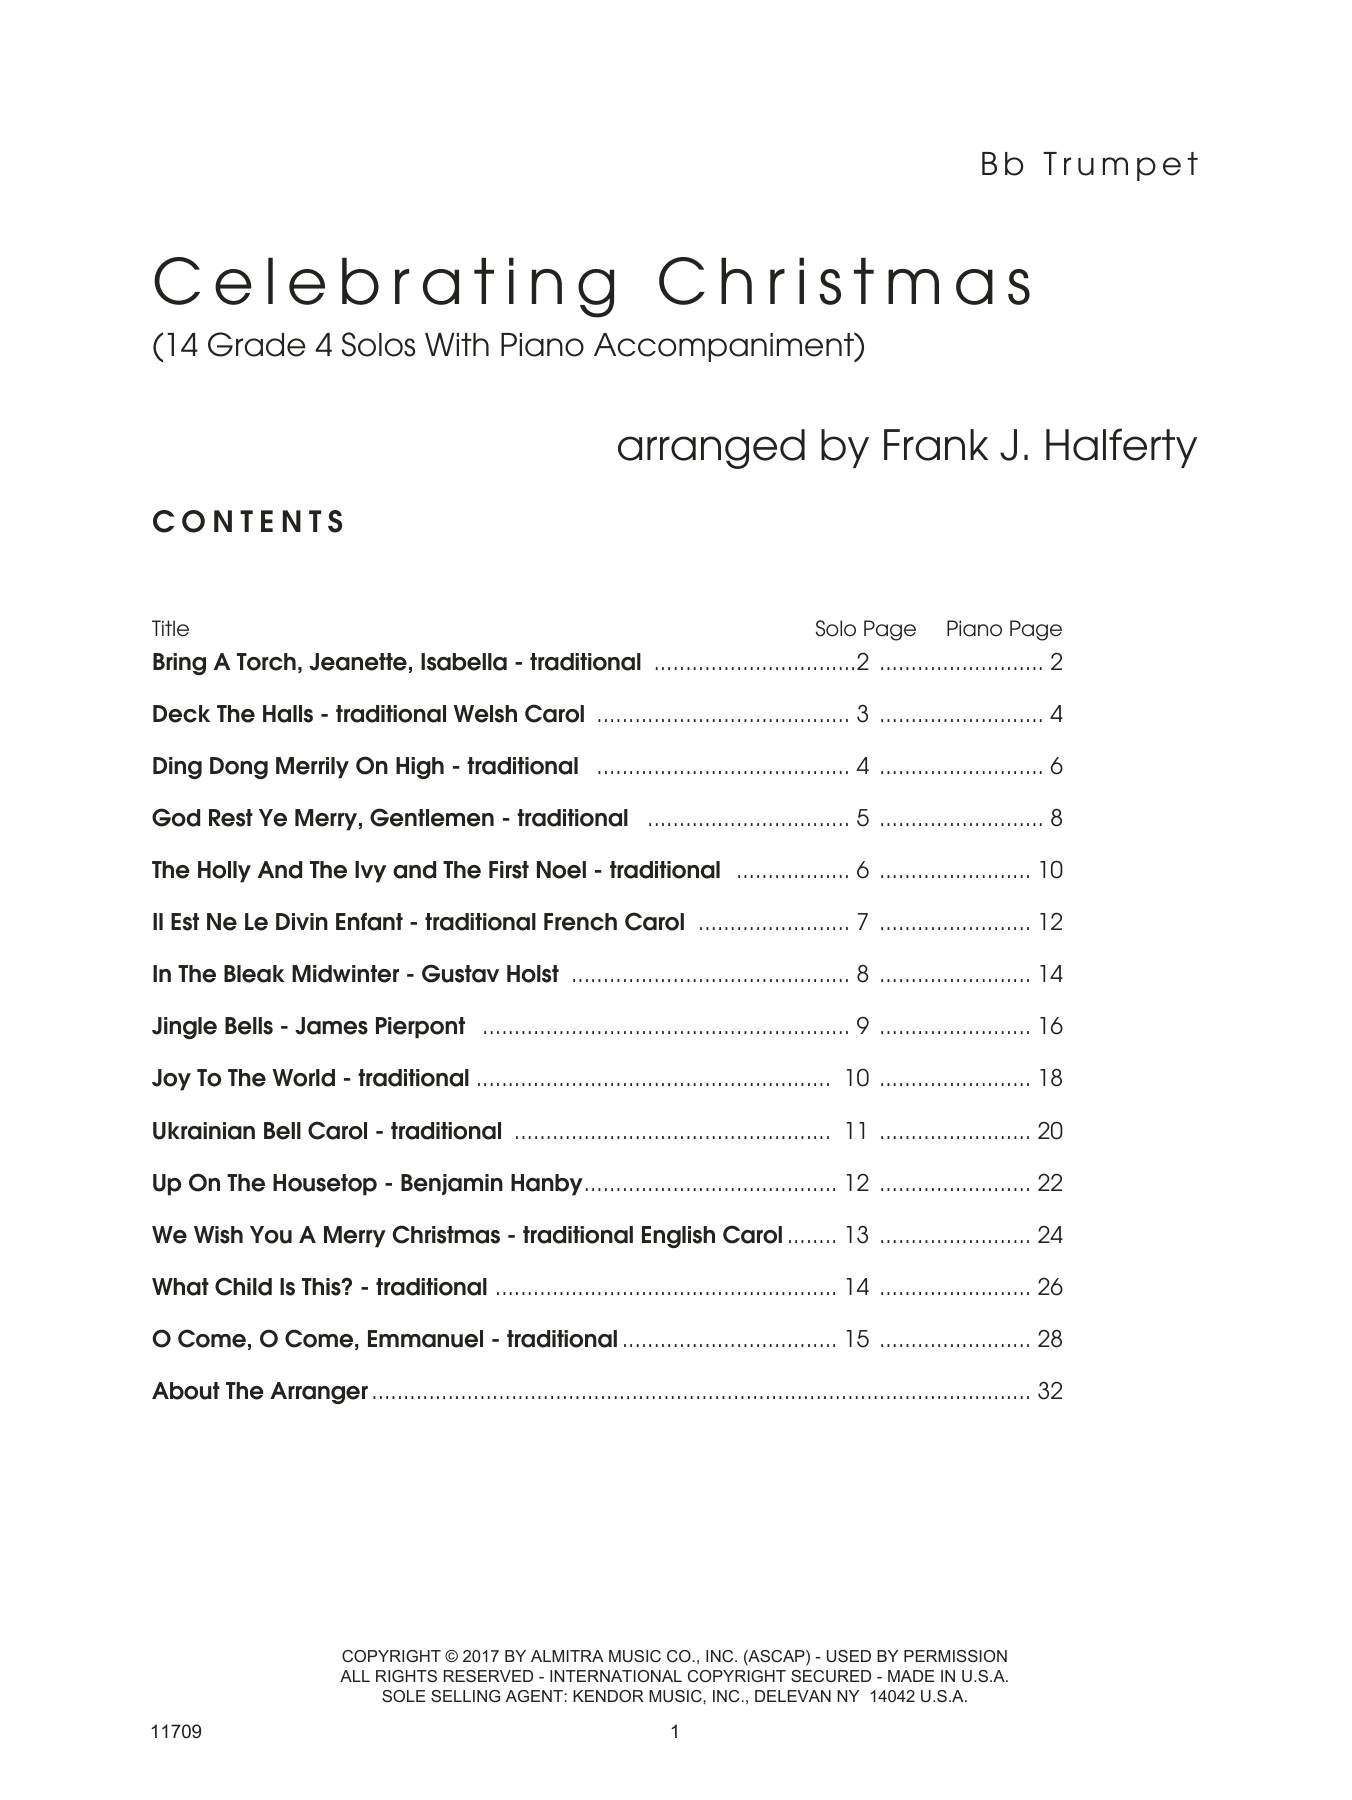 Celebrating Christmas (14 Grade 4 Solos With Piano Accompaniment) - Piano (optional) (Brass Solo) von Frank J. Halferty